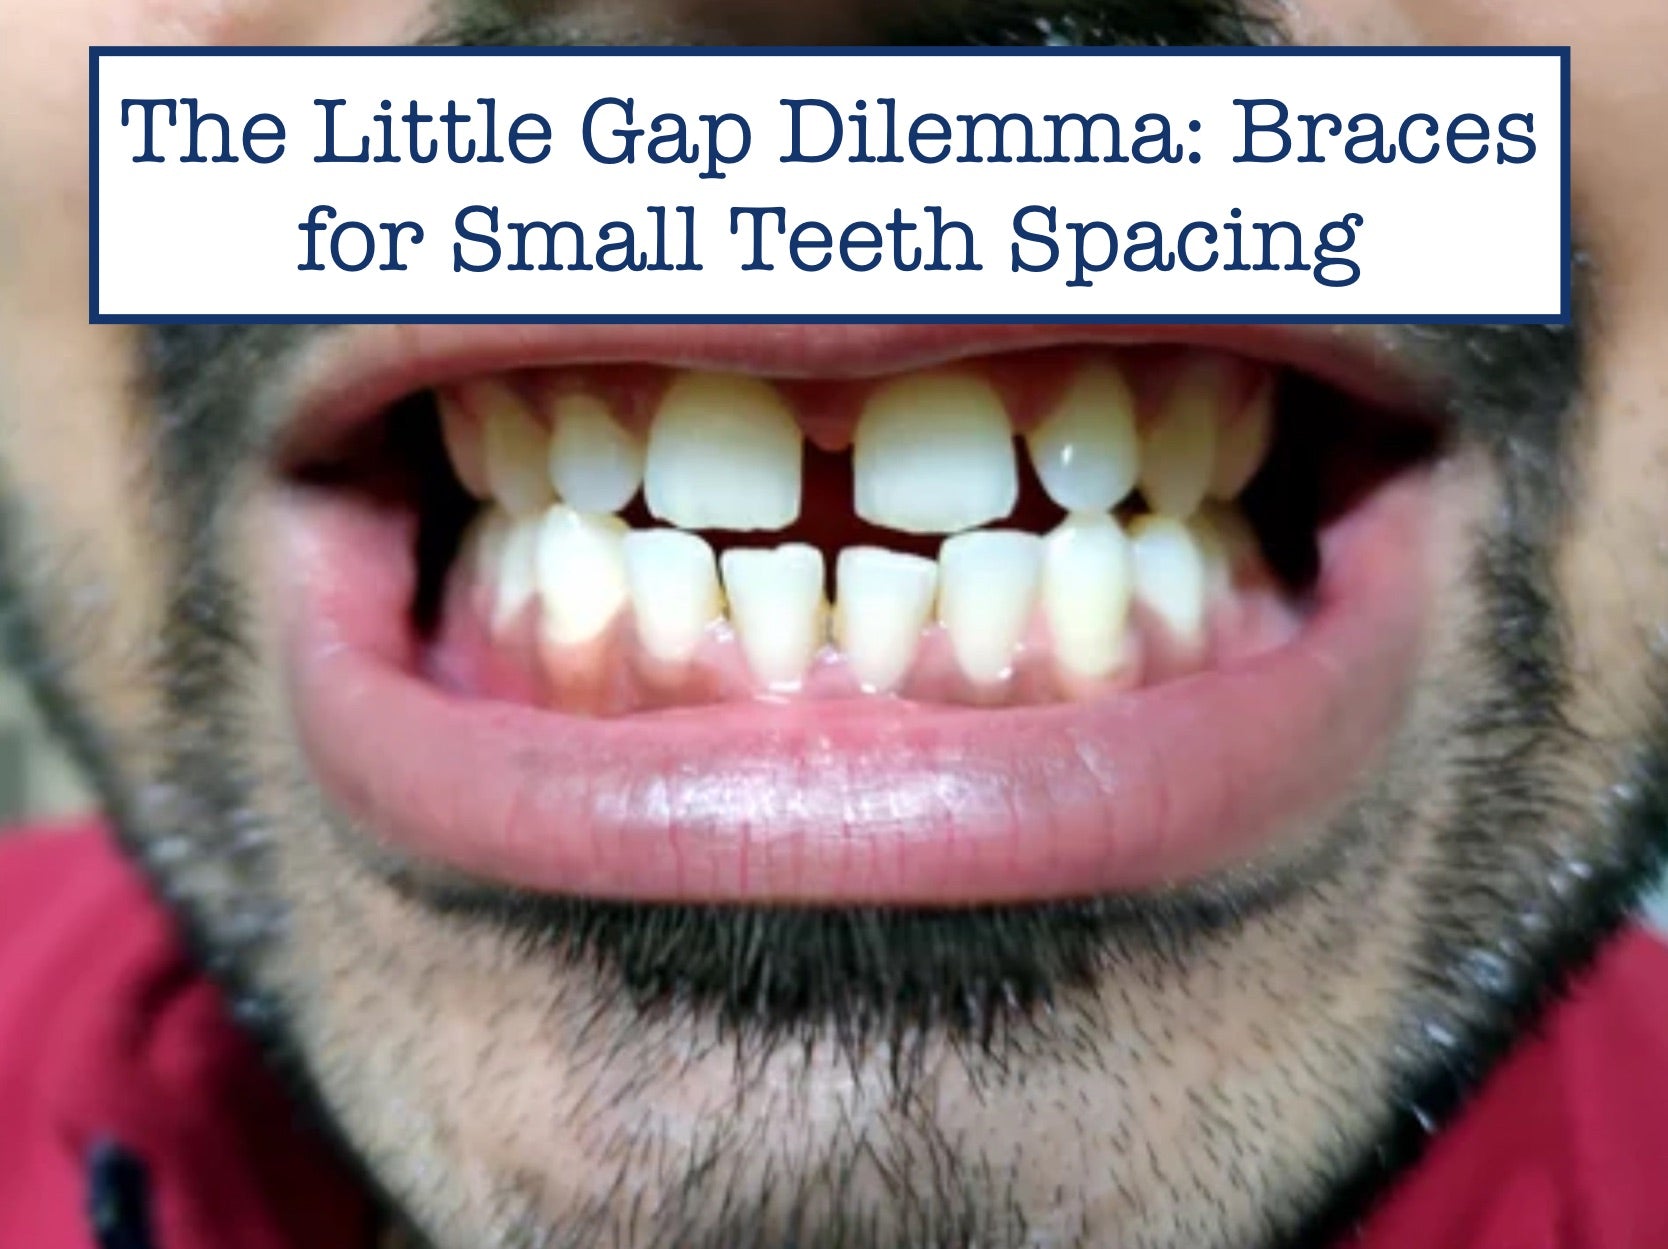 The Little Gap Dilemma: Braces for Small Teeth Spacing